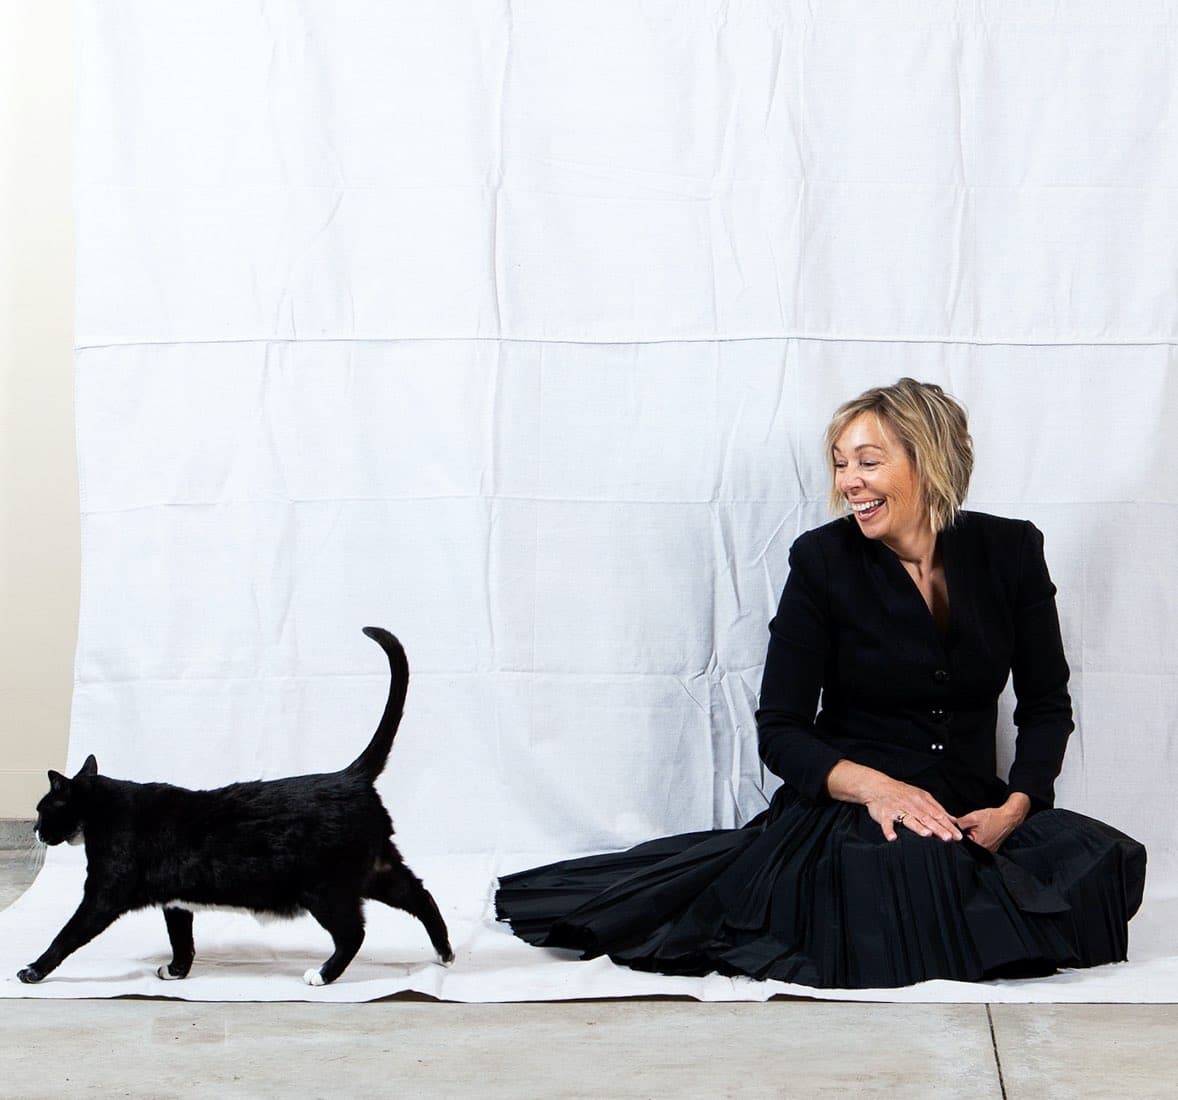 Cynthia McLoughlin and Dobbie the cat